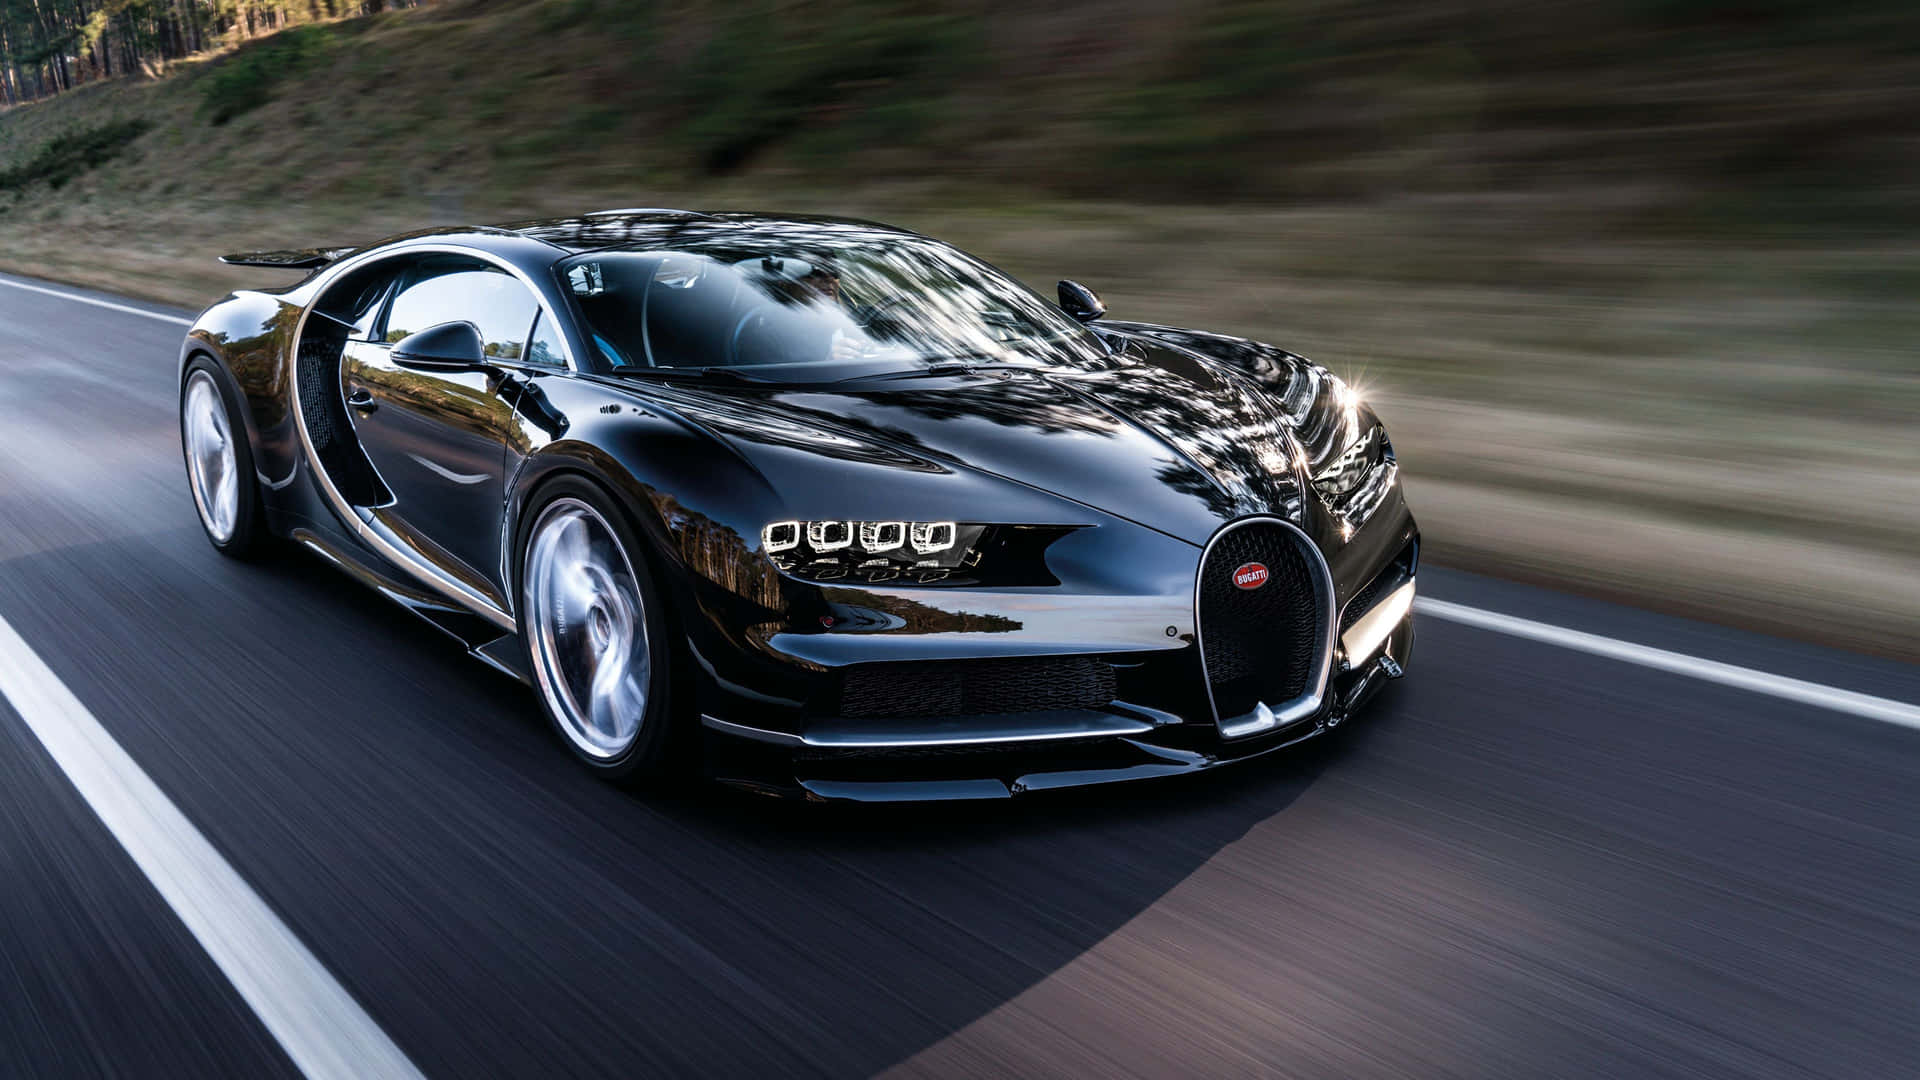 Top 10 Car Motion Blur Bugatti Chiron Wallpaper